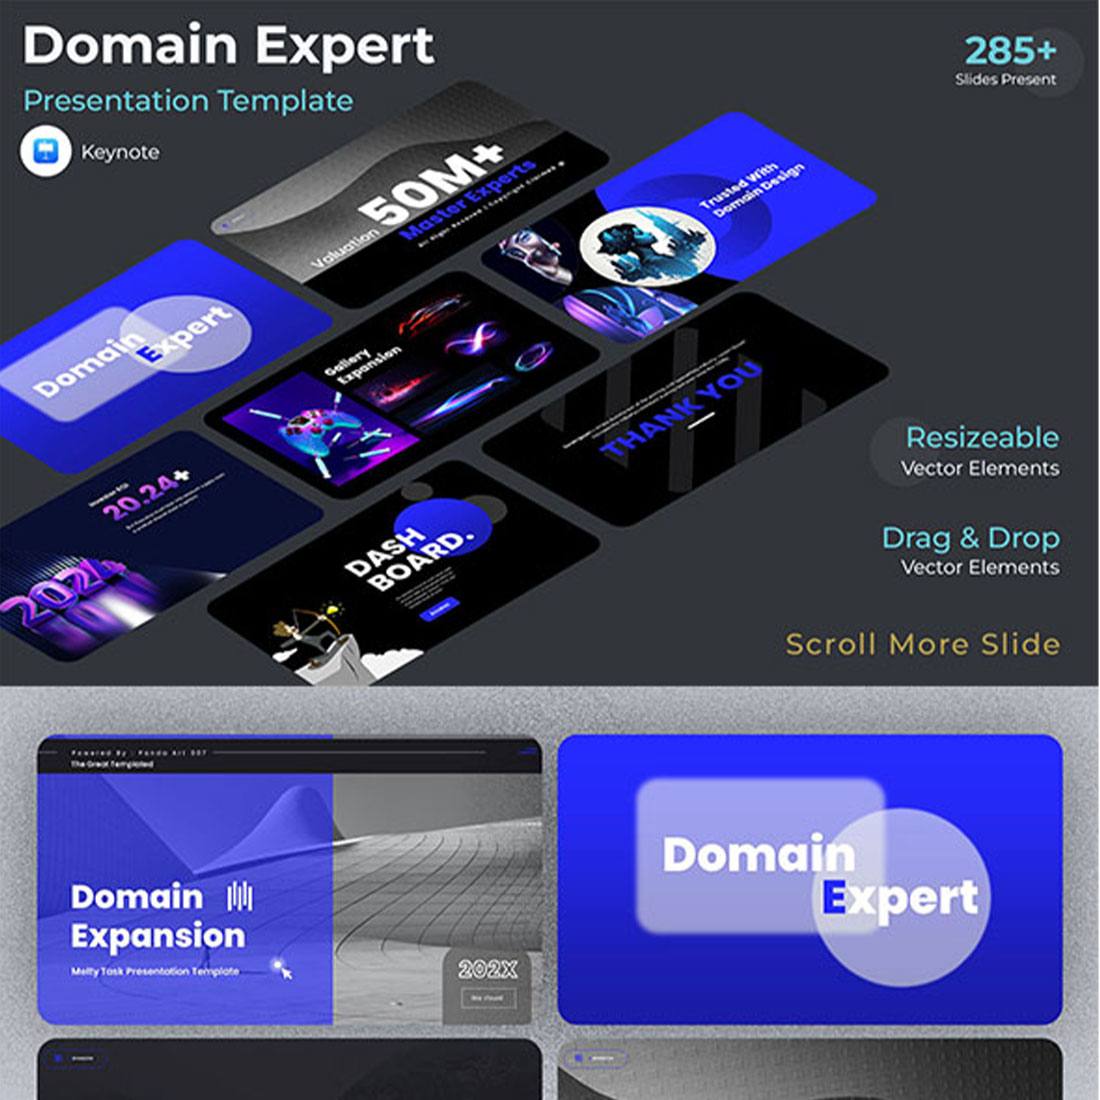 Domain Expansion Explain Keynote Presentation Template cover image.